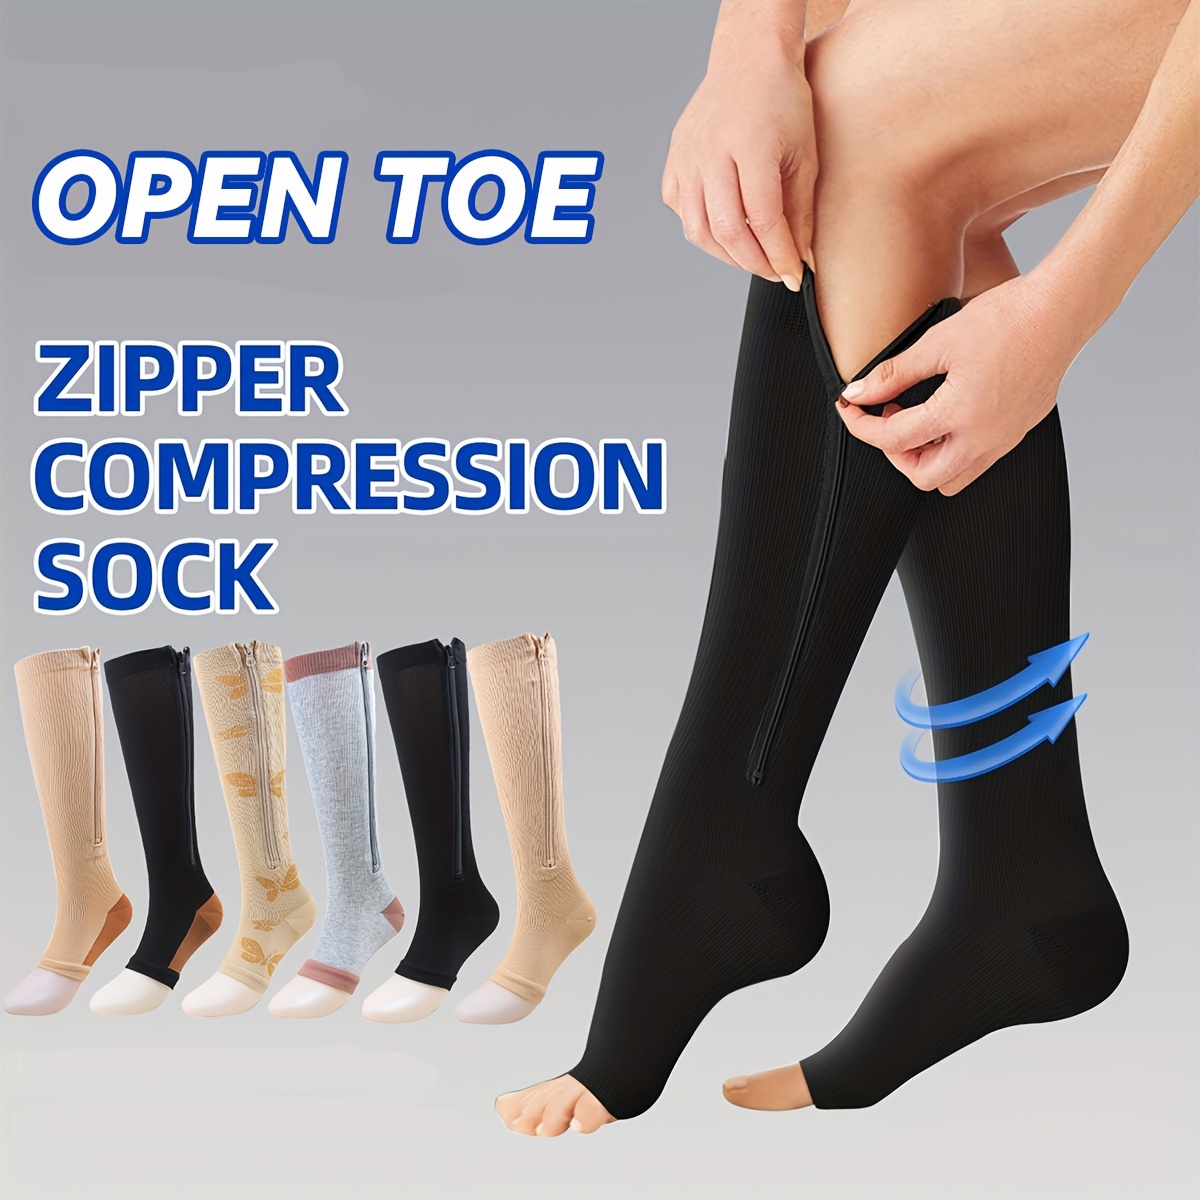 2 Pairs Zipper Compression Socks Thigh High 20-30 mmHg Compression Socks  with Zipper Closed Toe